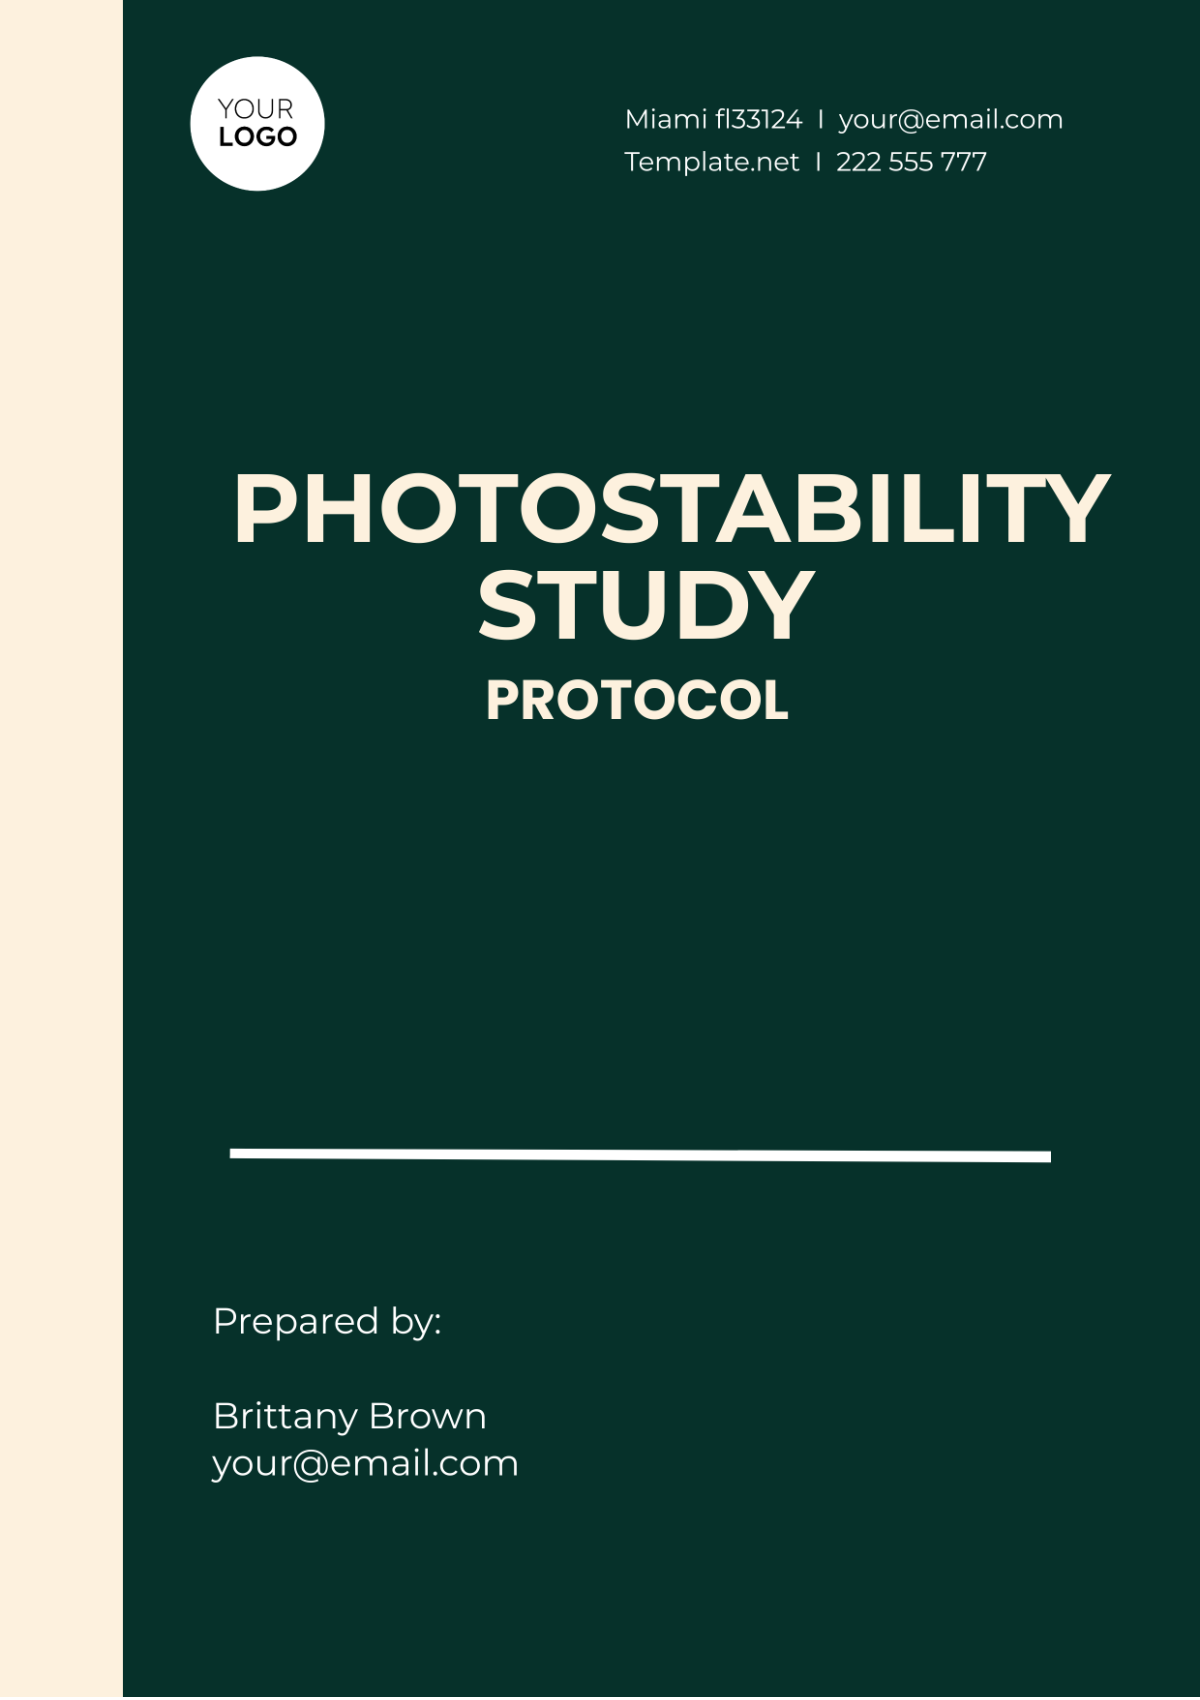 Photostability Study Protocol Template